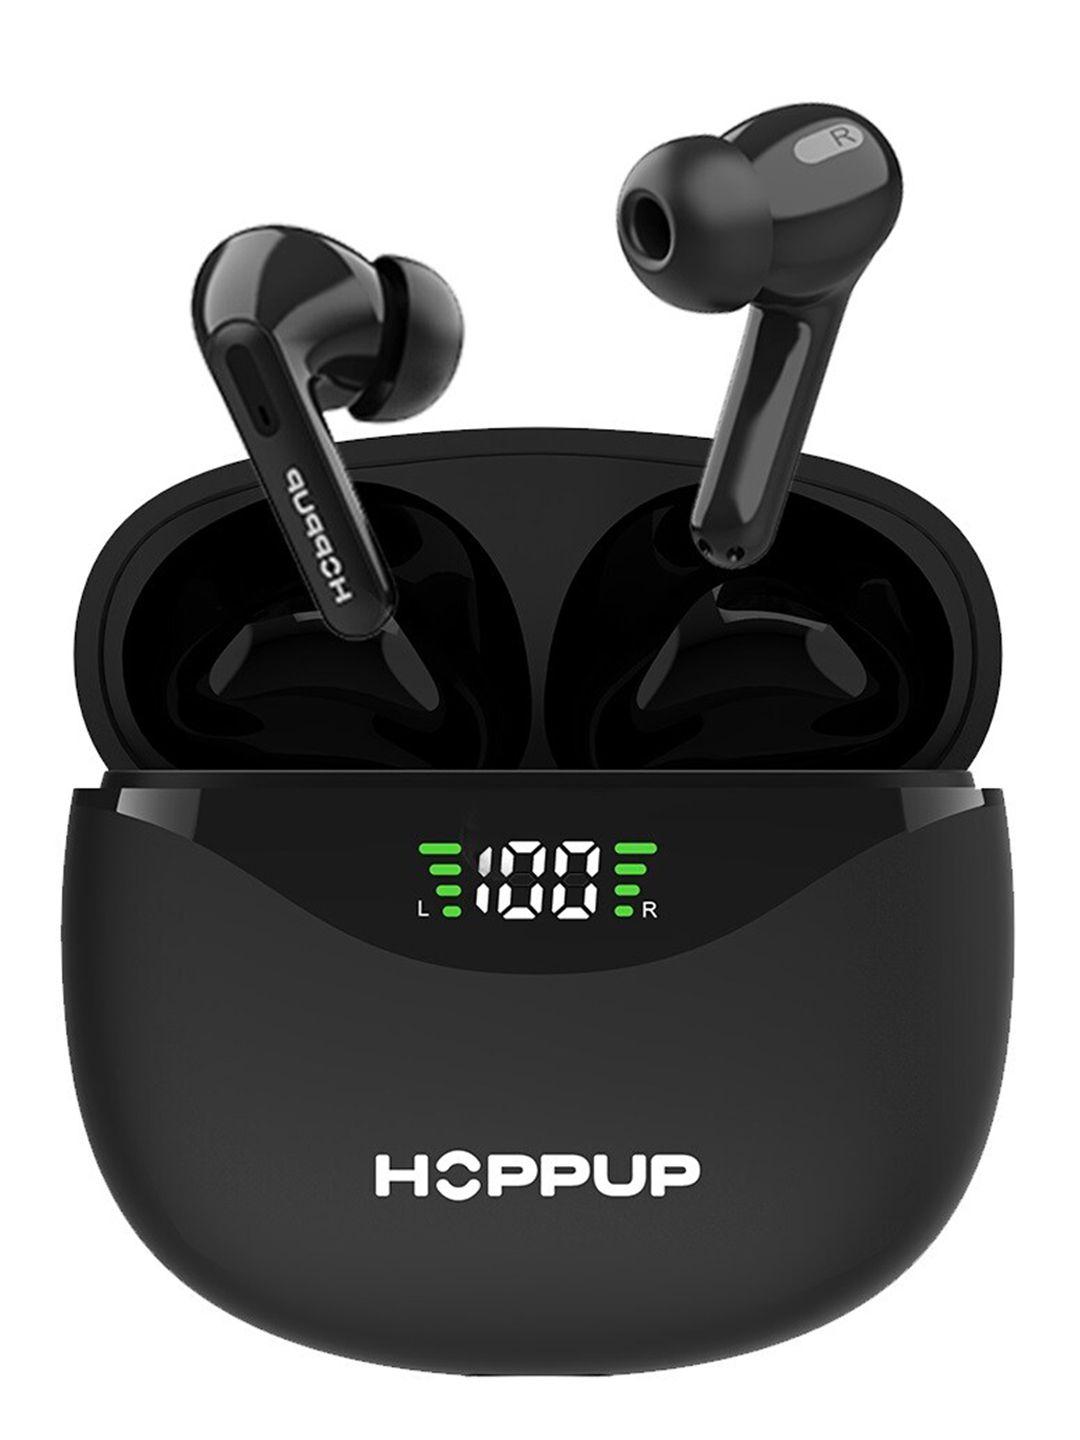 hoppup airdoze d50 earbuds with 10mm drivers headphones